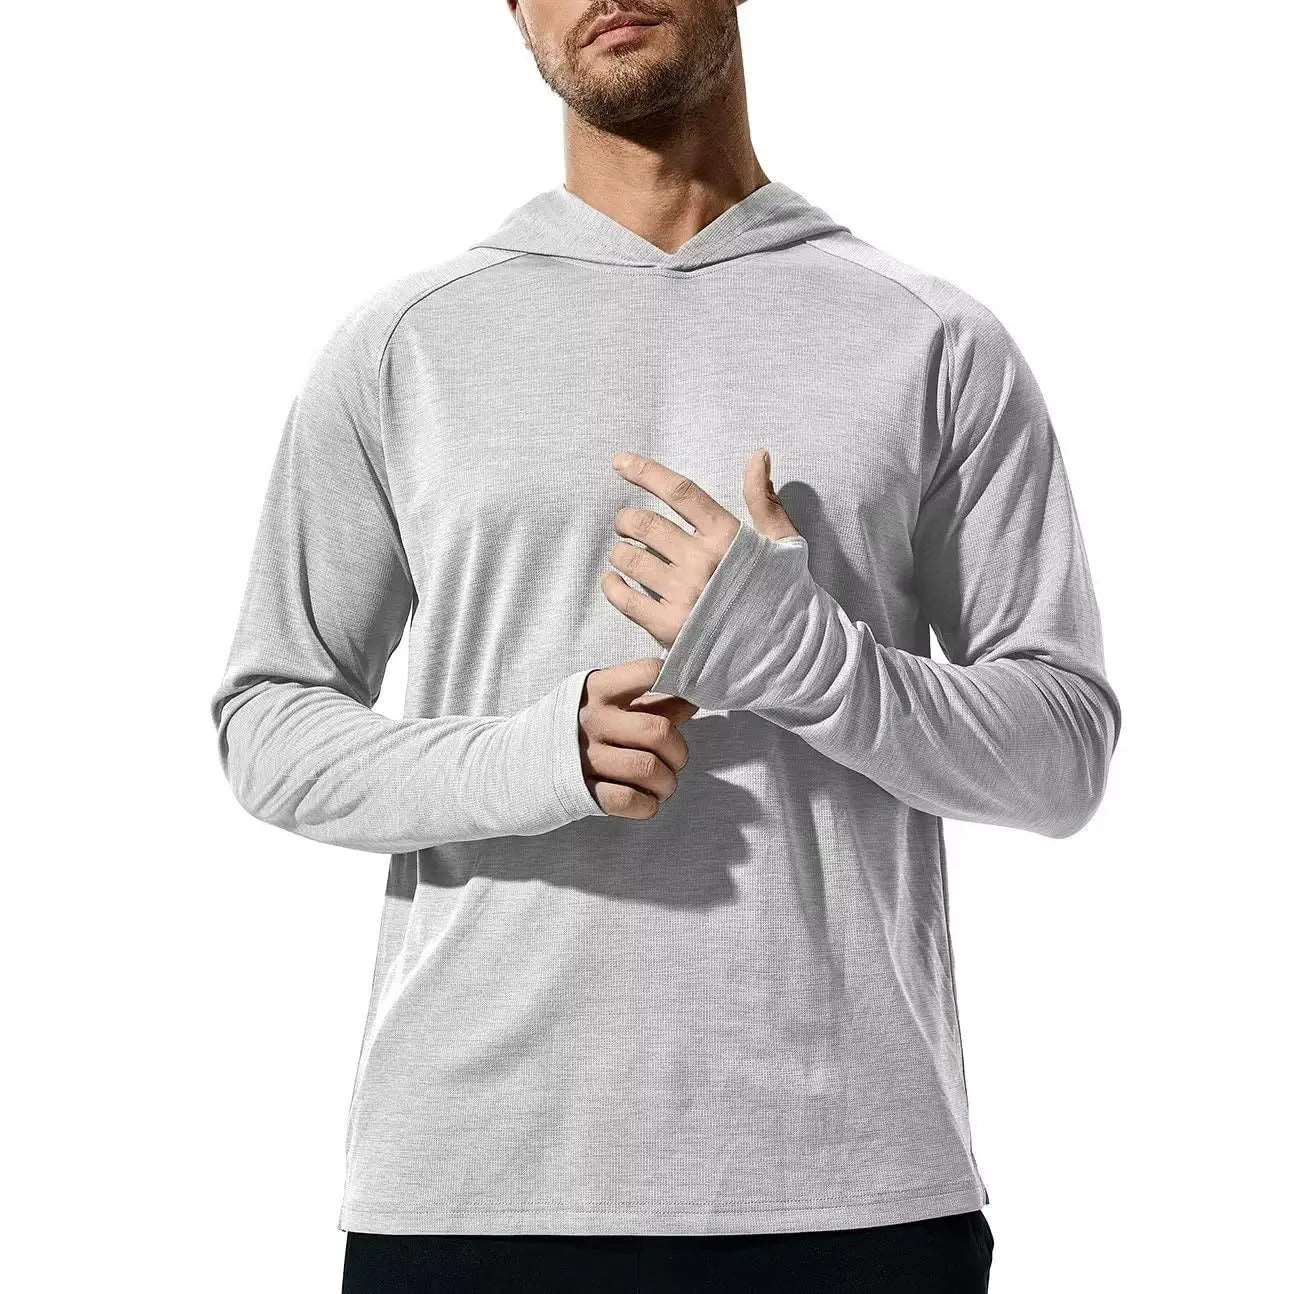 Men's UPF 50+ Sun Protection Hoodie Shirt with Thumbholes